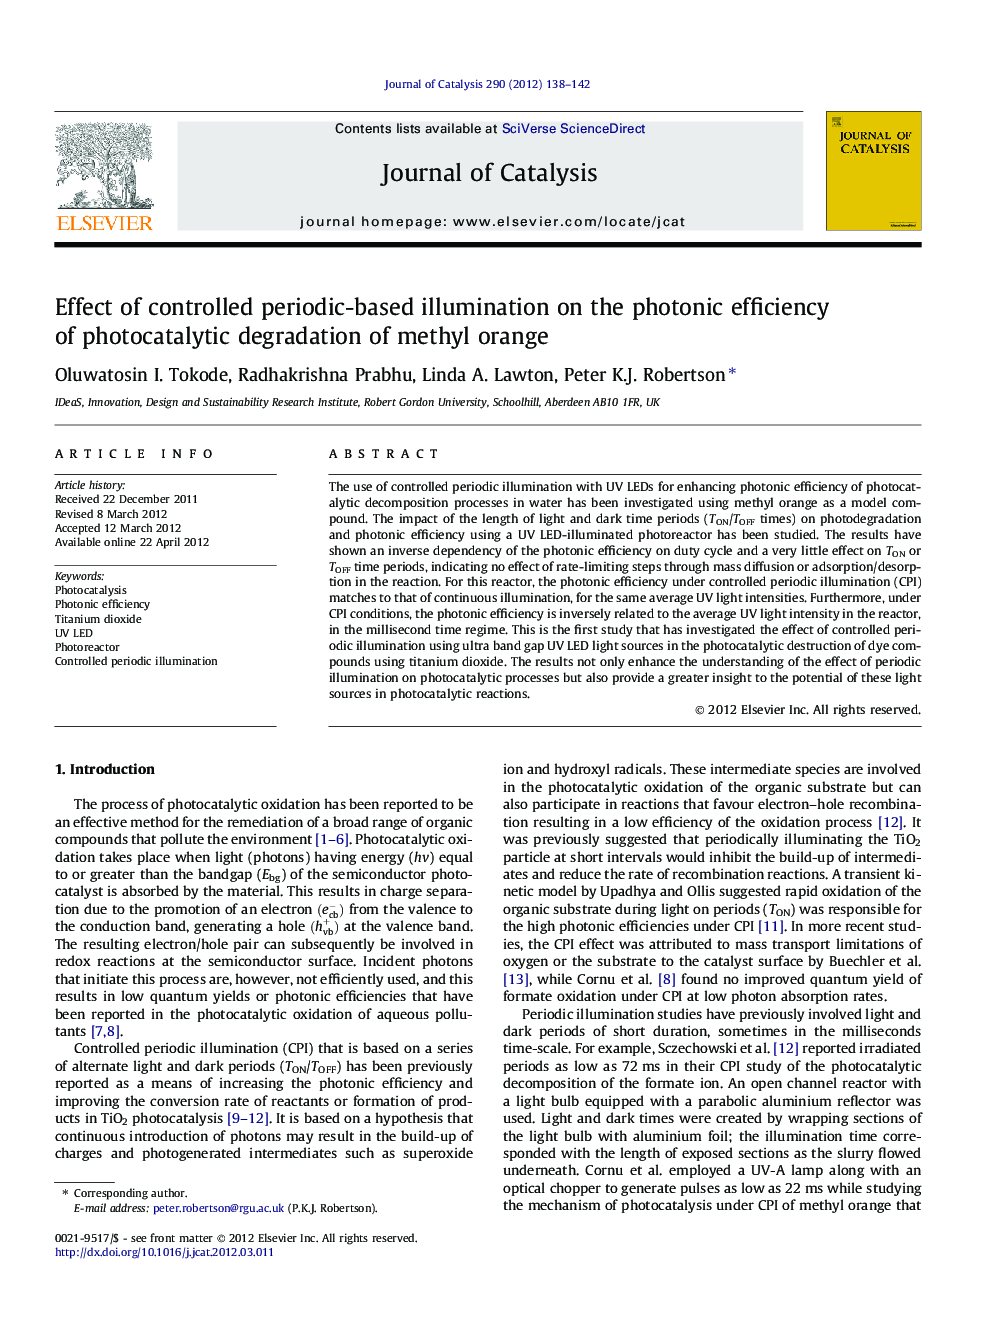 Effect of controlled periodic-based illumination on the photonic efficiency of photocatalytic degradation of methyl orange